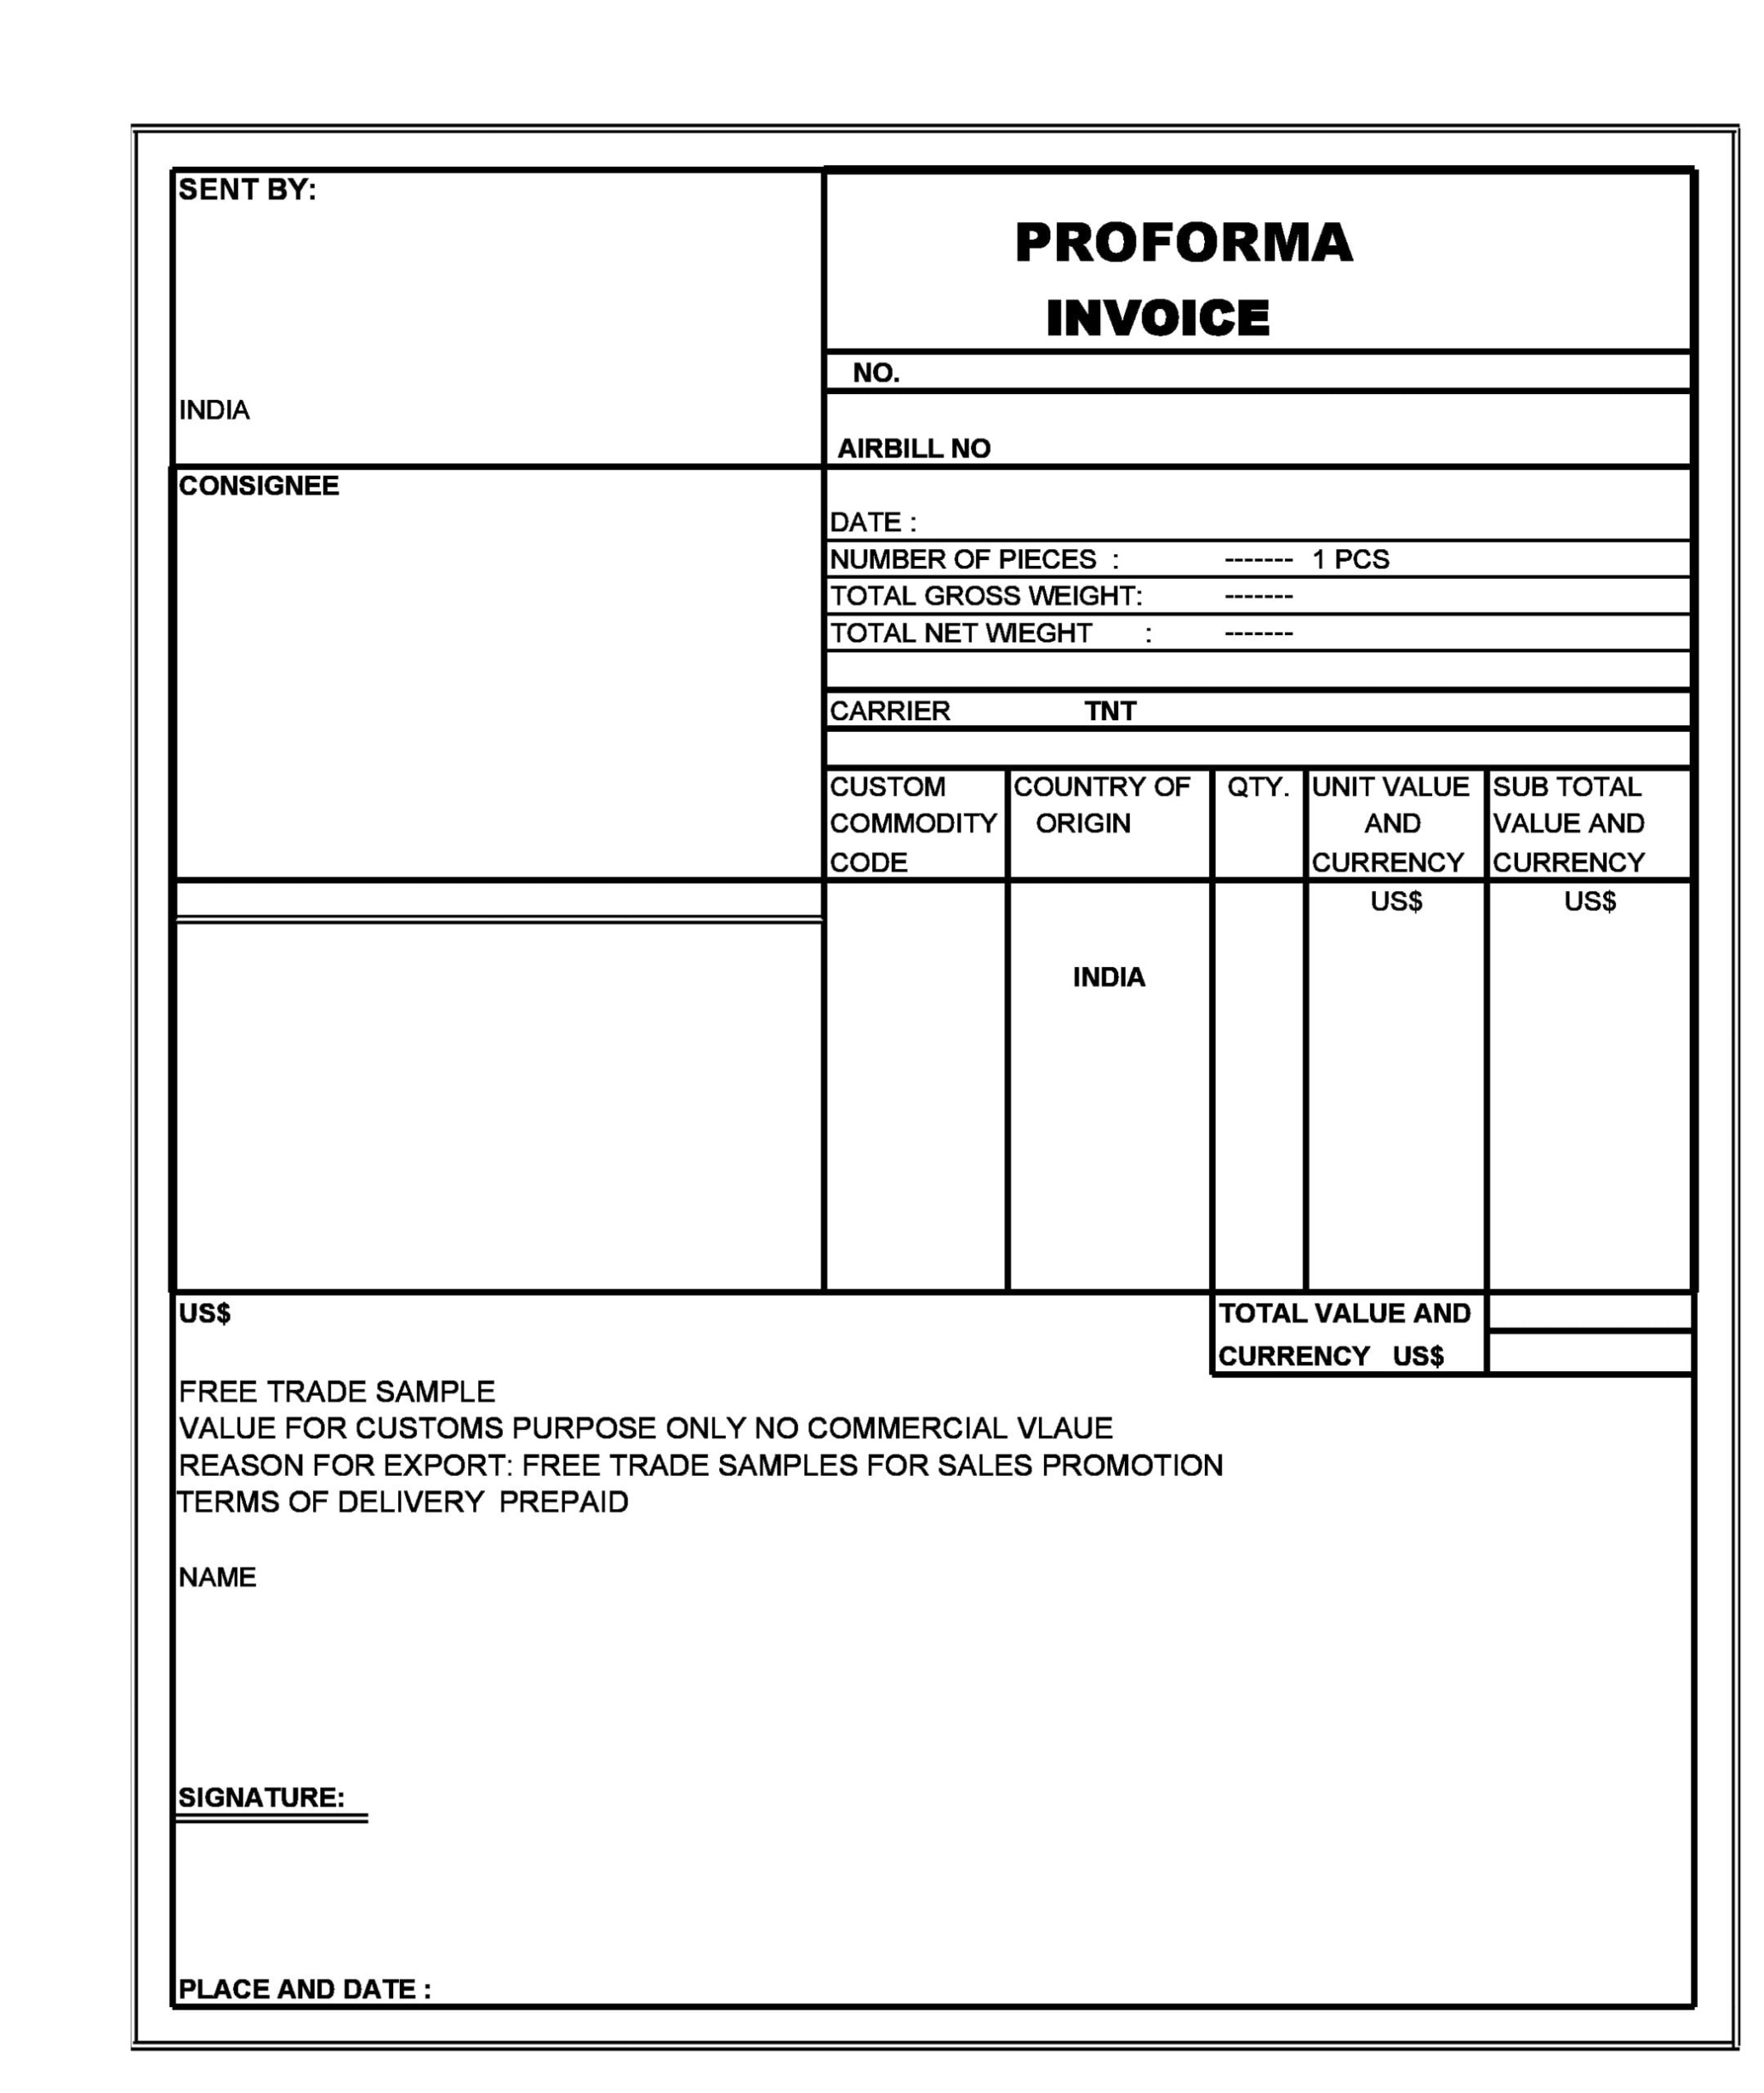 30 Free Proforma Invoice Templates [Excel, Word, Pdf] - Templatearchive For Template Of Proforma Invoice